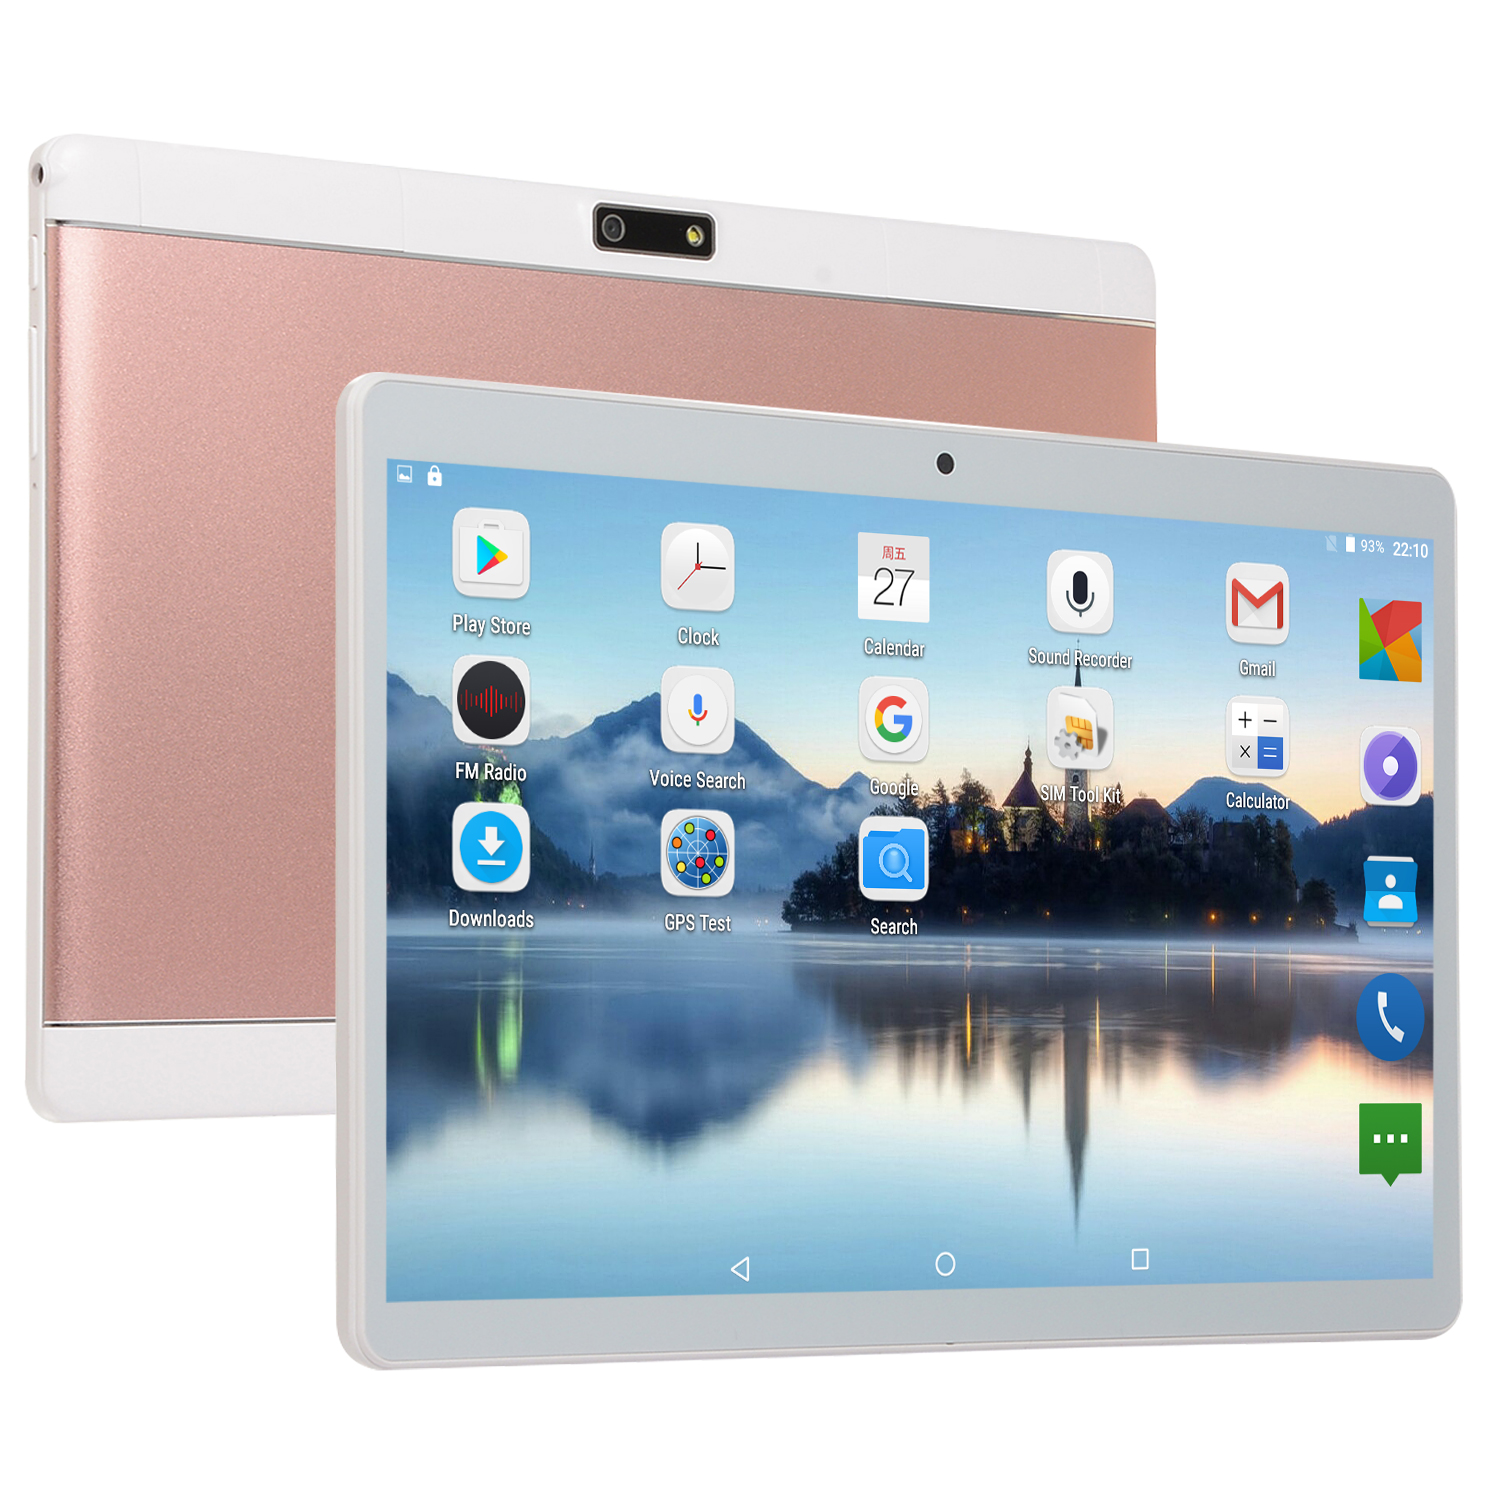 OPPQ Tablet แท็บเล็ต แท็บเล็ตถูกๆ เรียนออนไลน์ 【Andorid】ข้อเสนอที่ดีที่สุด แท็ปเล็ต 10.1นิ้ว Android 10.0 Octa Core 10.1 Inch Tablet PC 8GB RAM 512GB ROM WIFI Tempered Glass Screen Resolution 2560 * 1600 HD Camera Tablet